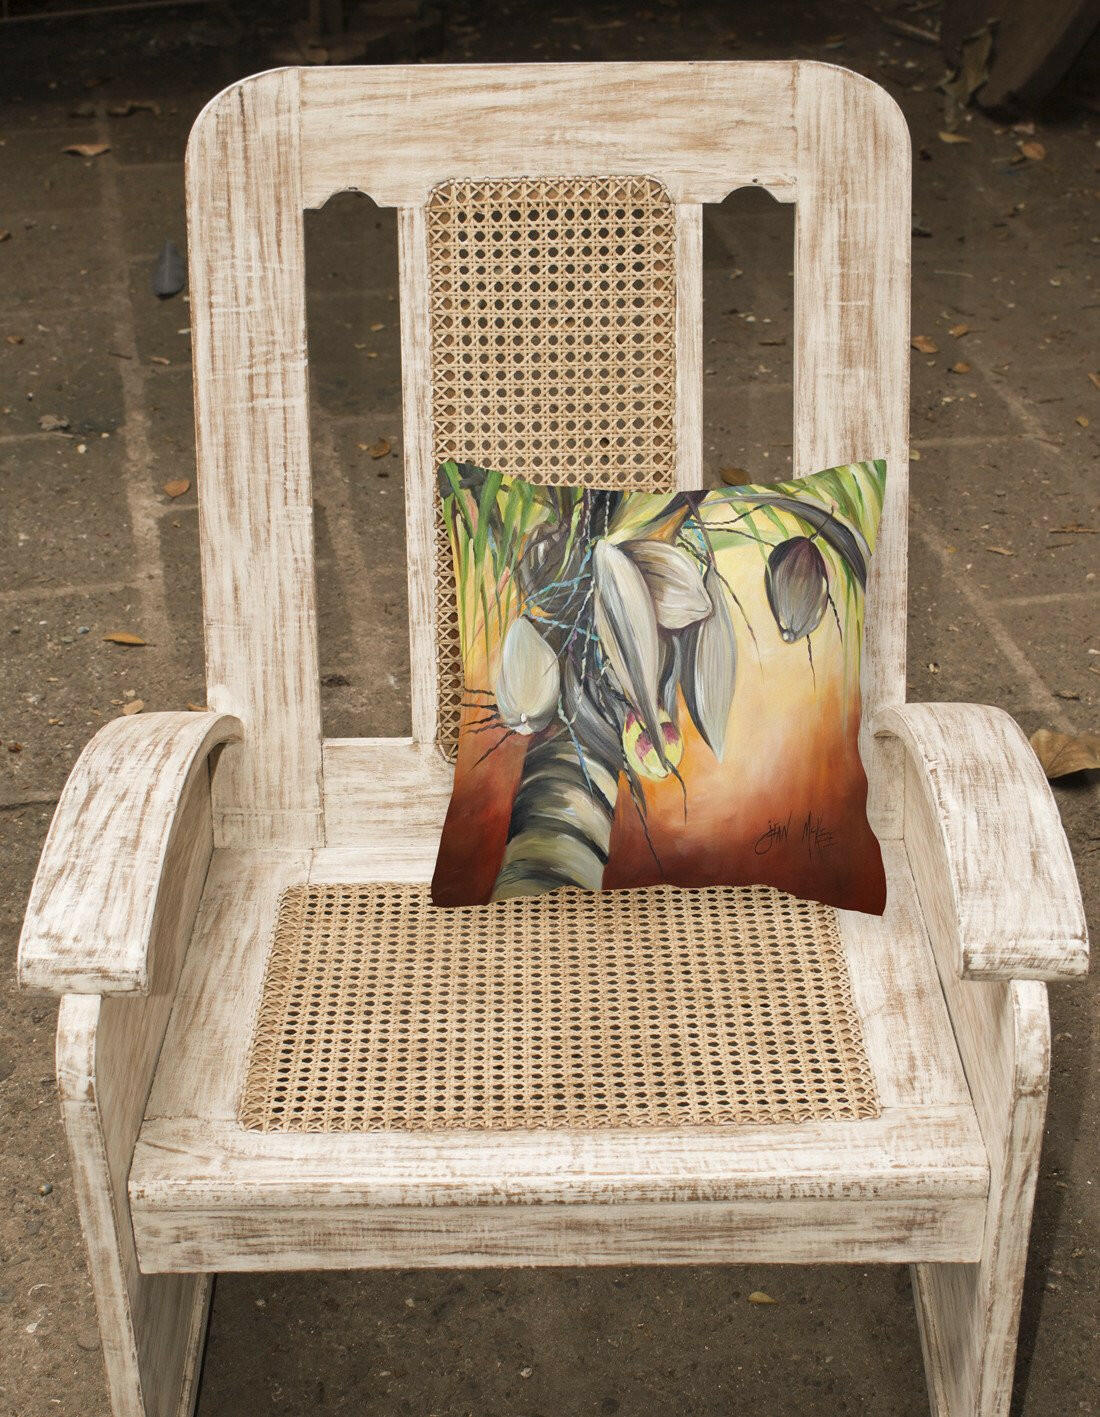 Orange Coconut Tree Canvas Fabric Decorative Pillow JMK1280PW1414 by Caroline's Treasures